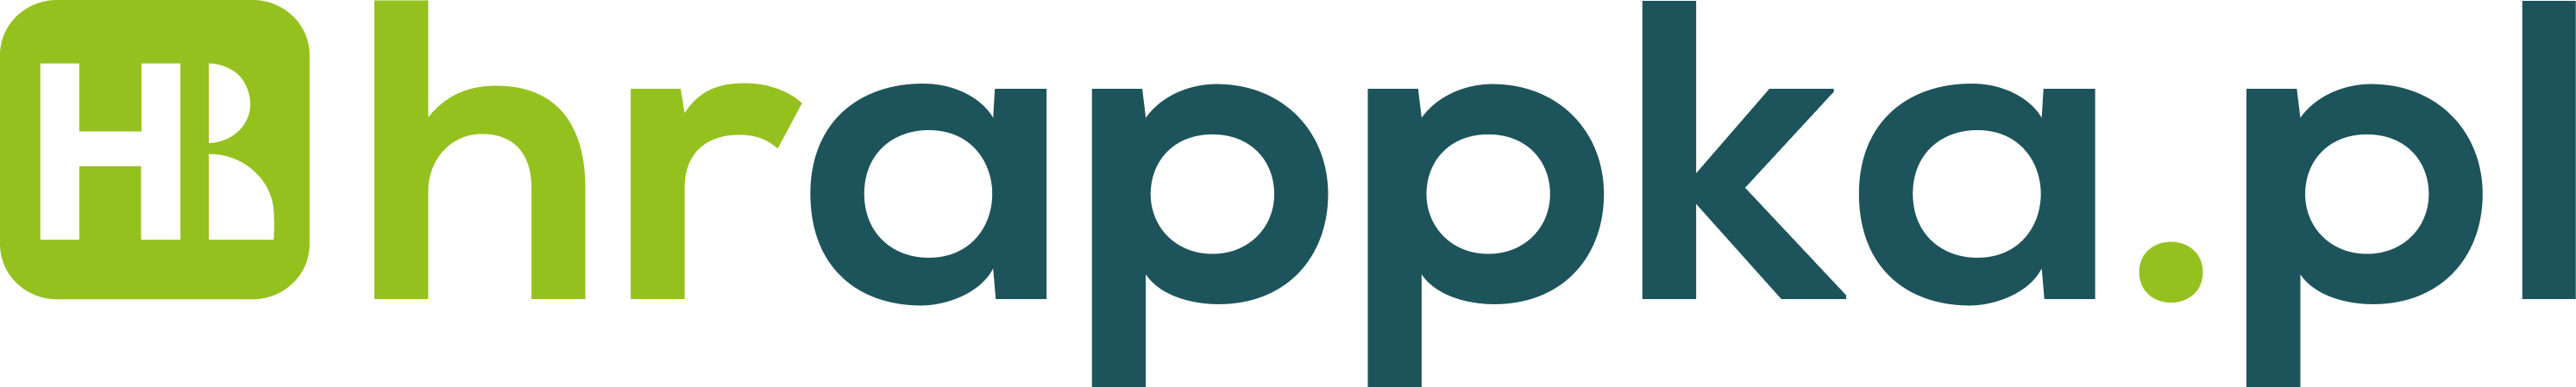 HRappka.pl logo